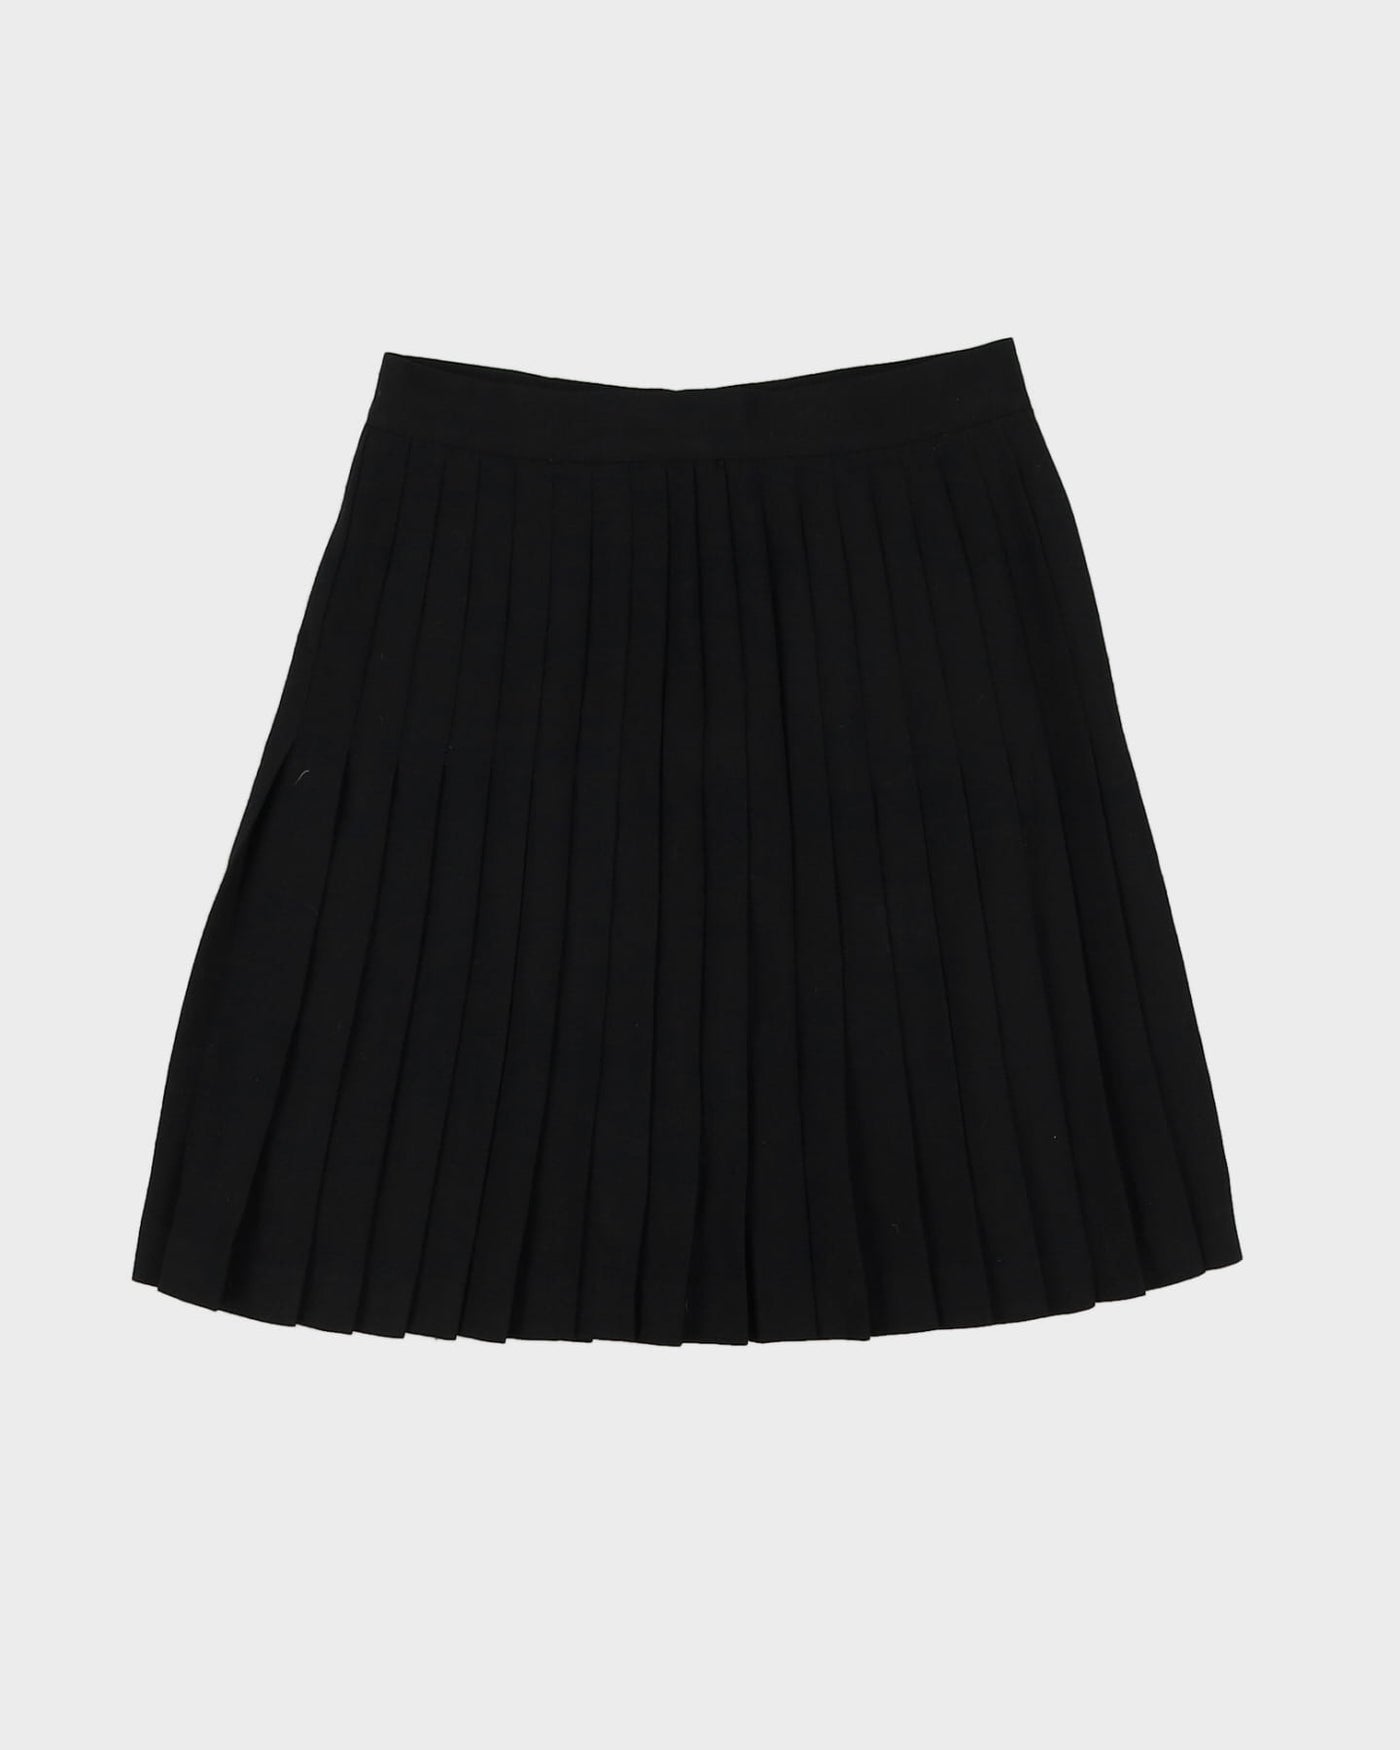 00s Black Pleated Skirt - S